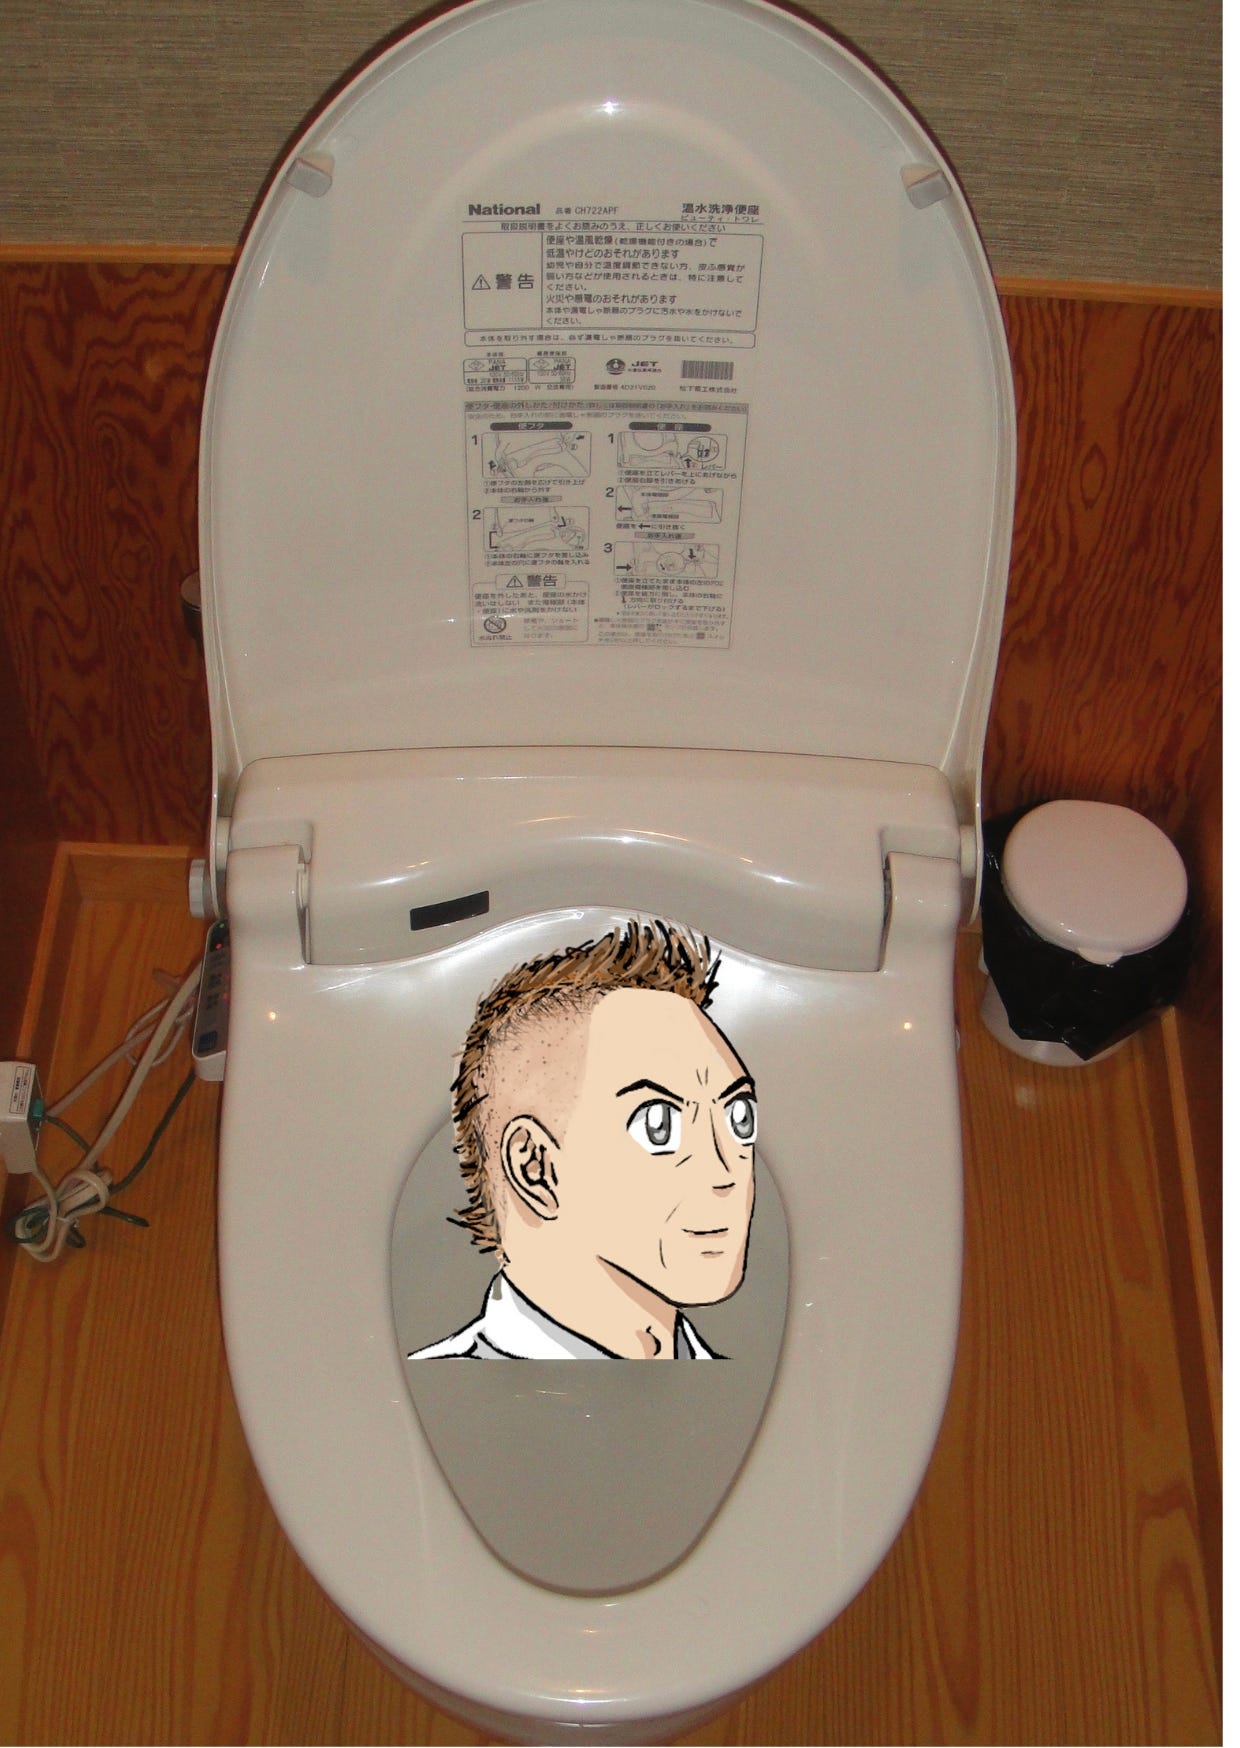 Skibidi Toilet:  Meme Turned Online Game & Cultural Phenomenon